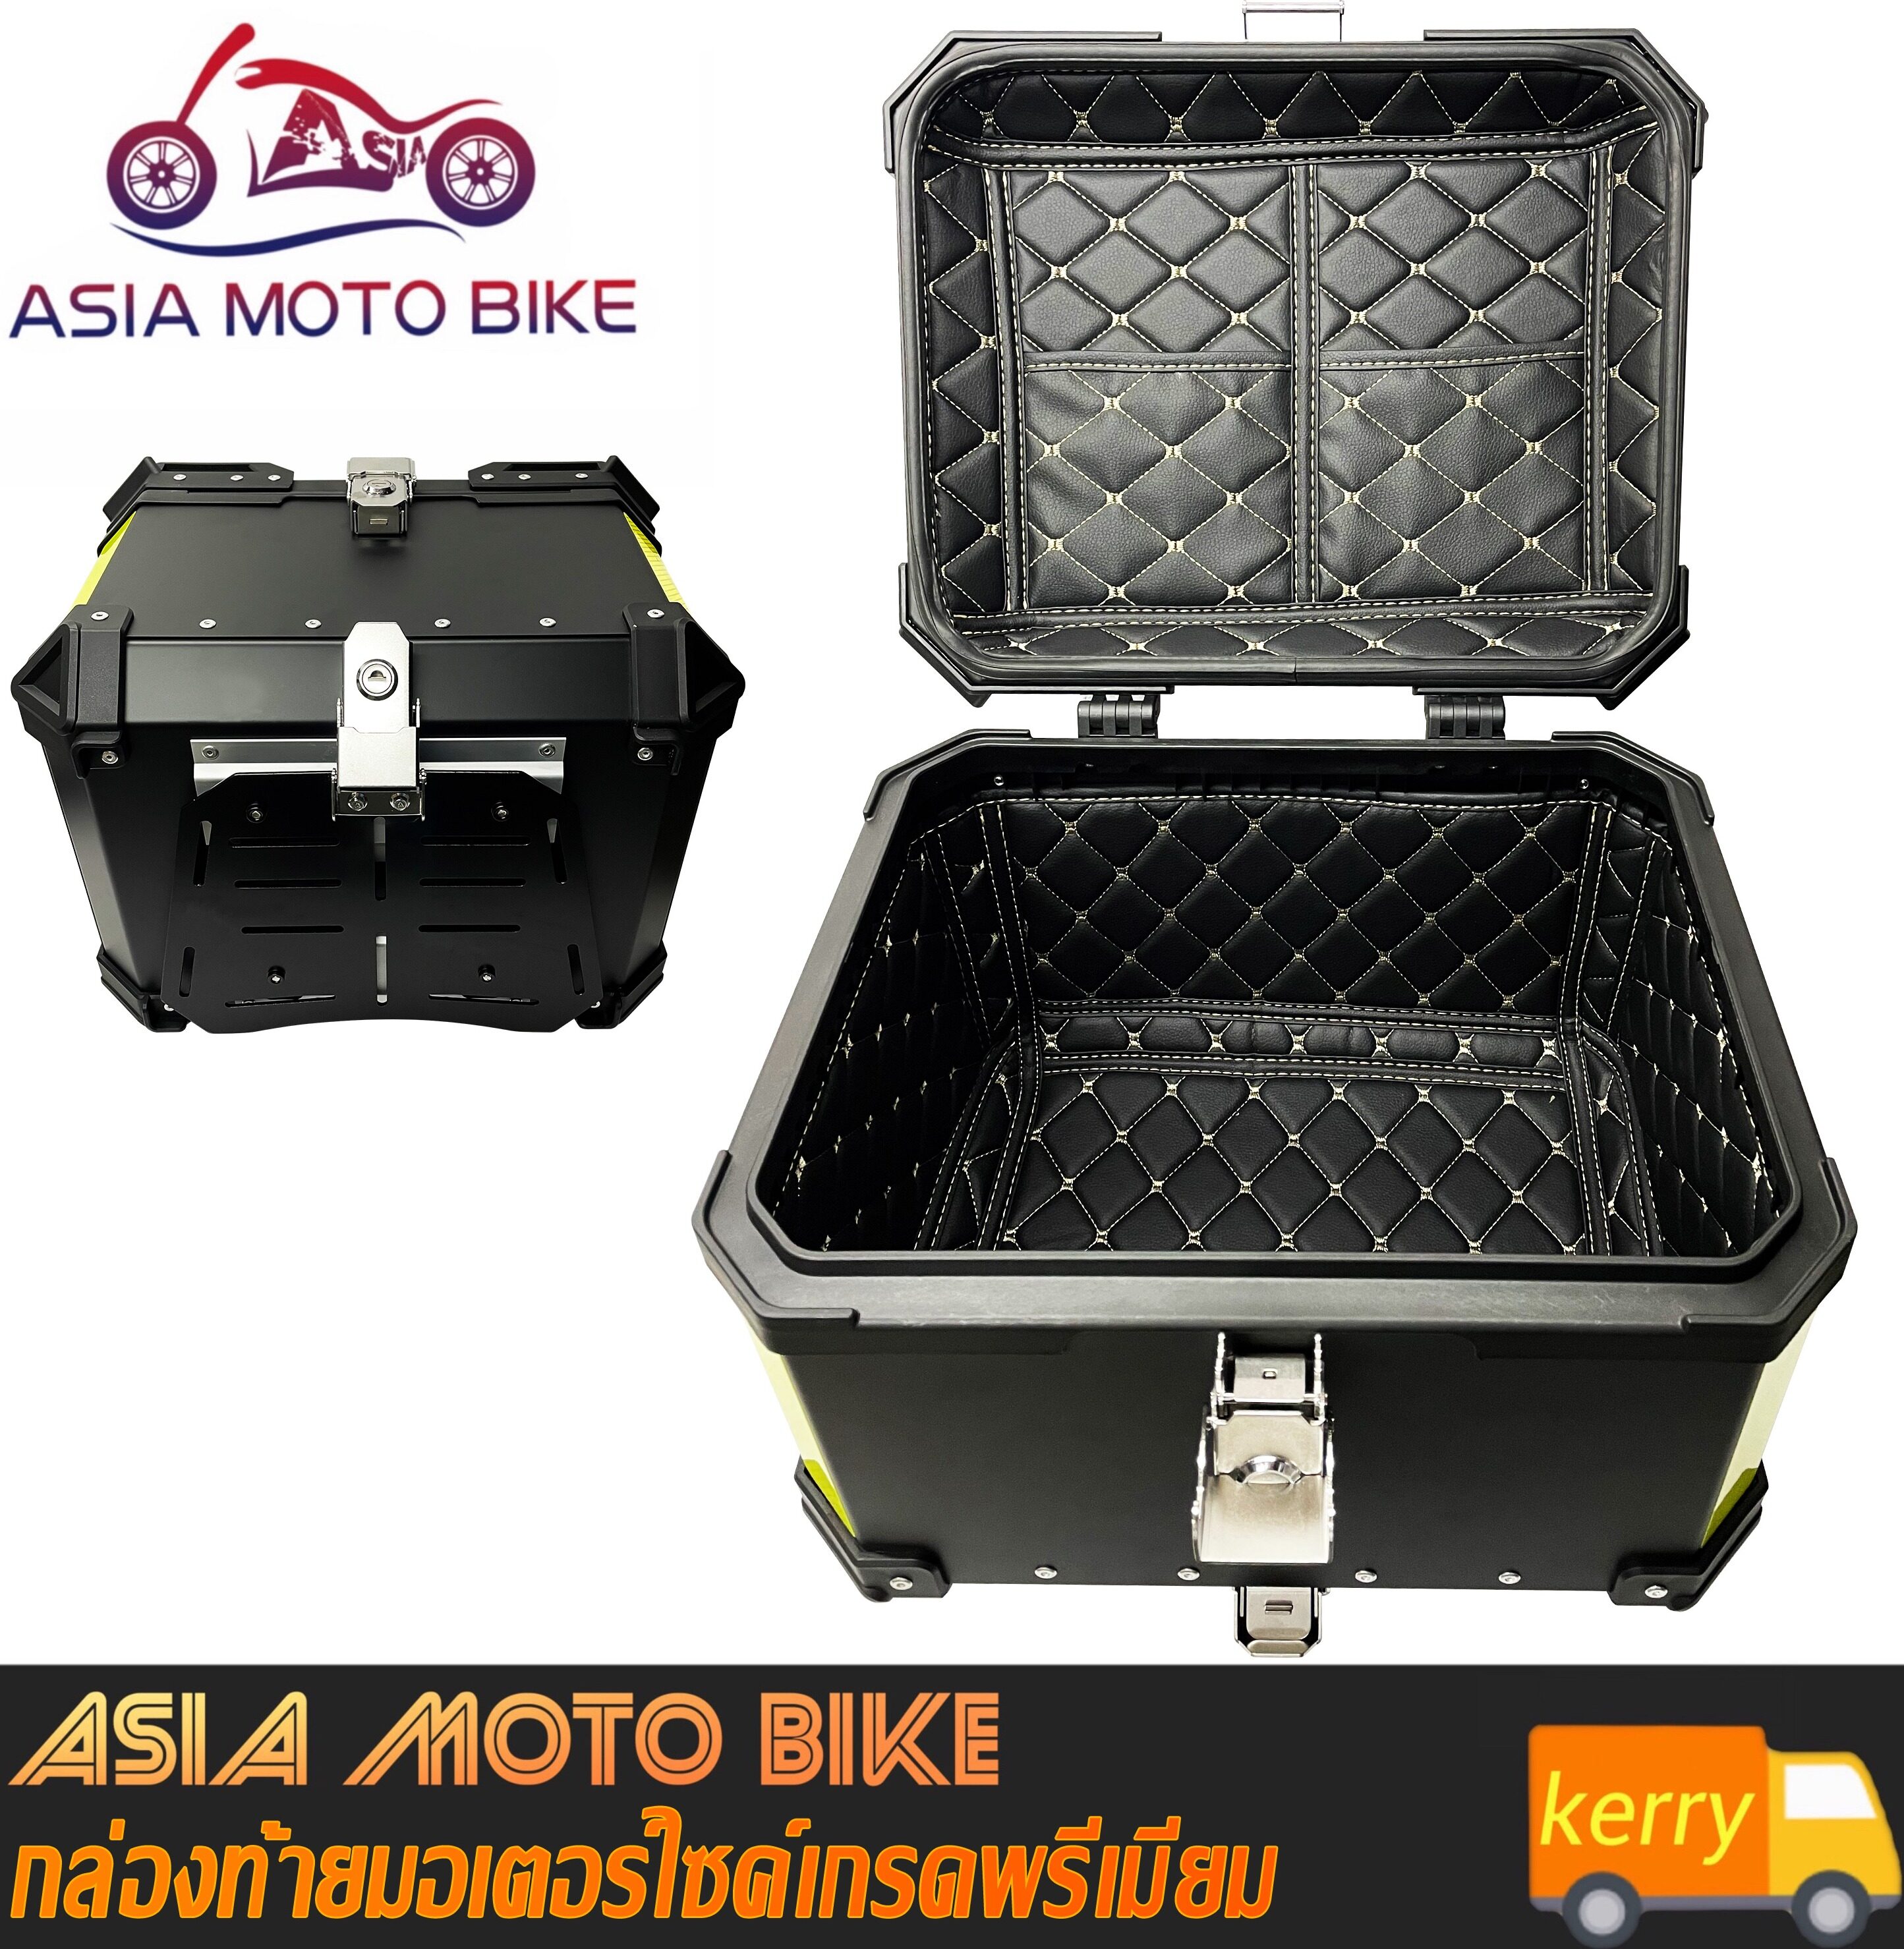 Asia motobike กล่องท้ายมอเตอร์ไซค์ เกรดพรีเมี่ยมอย่างดี-45ลิตร/(สีดำเรียบ)G3600